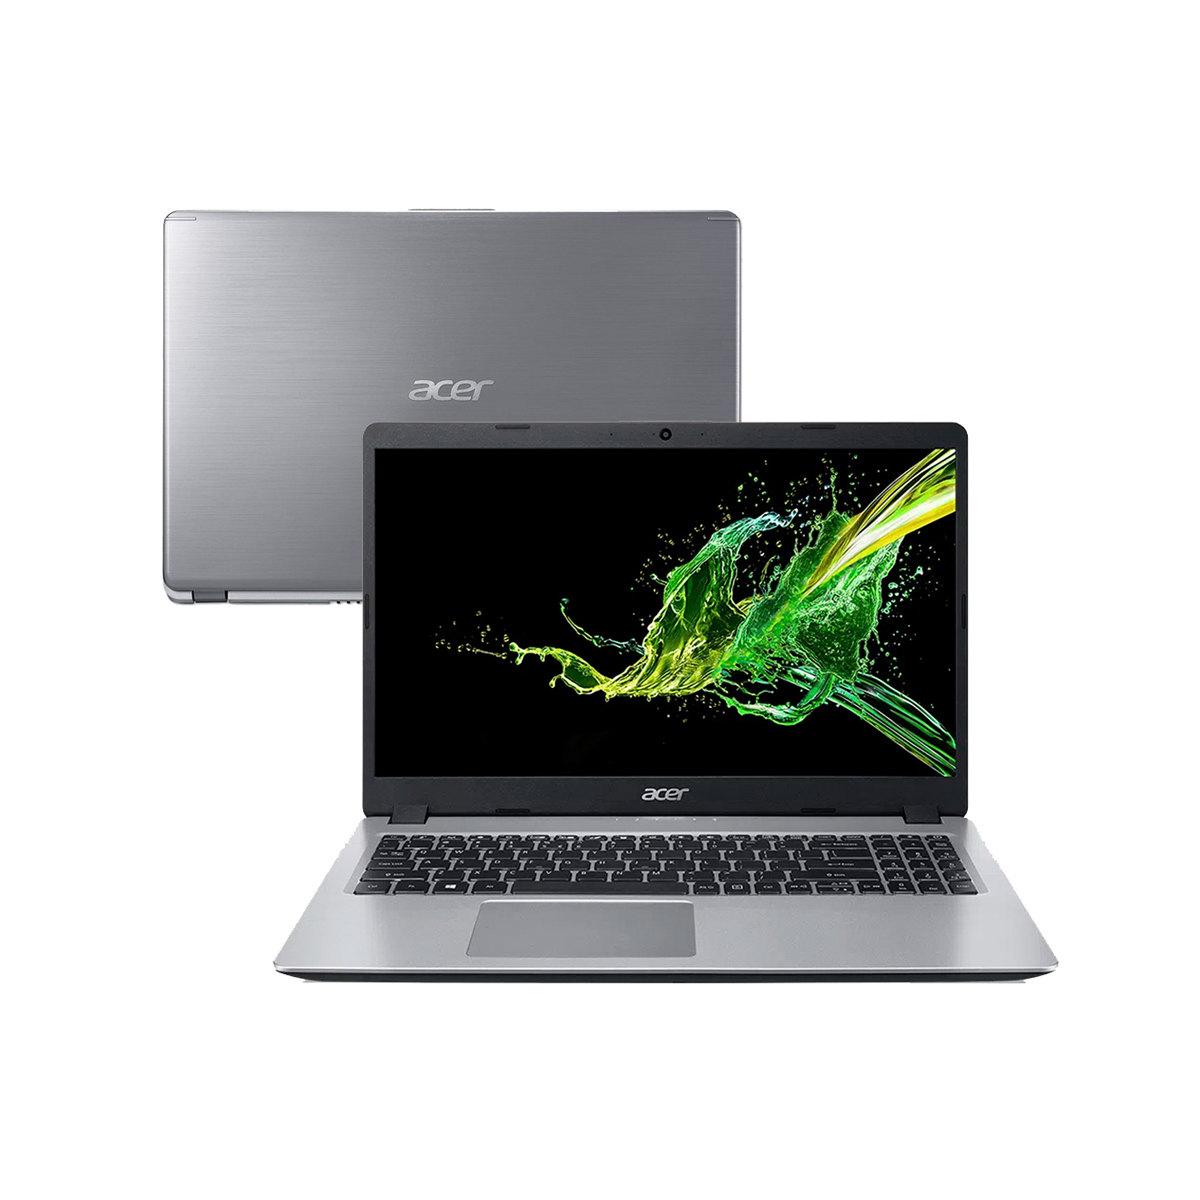 Notebook Acer A515 Core I5 8265u Memoria 8gb Ddr4 Hd 1tb Tela 15.6' Led Hd Sistema Windows 10 Home